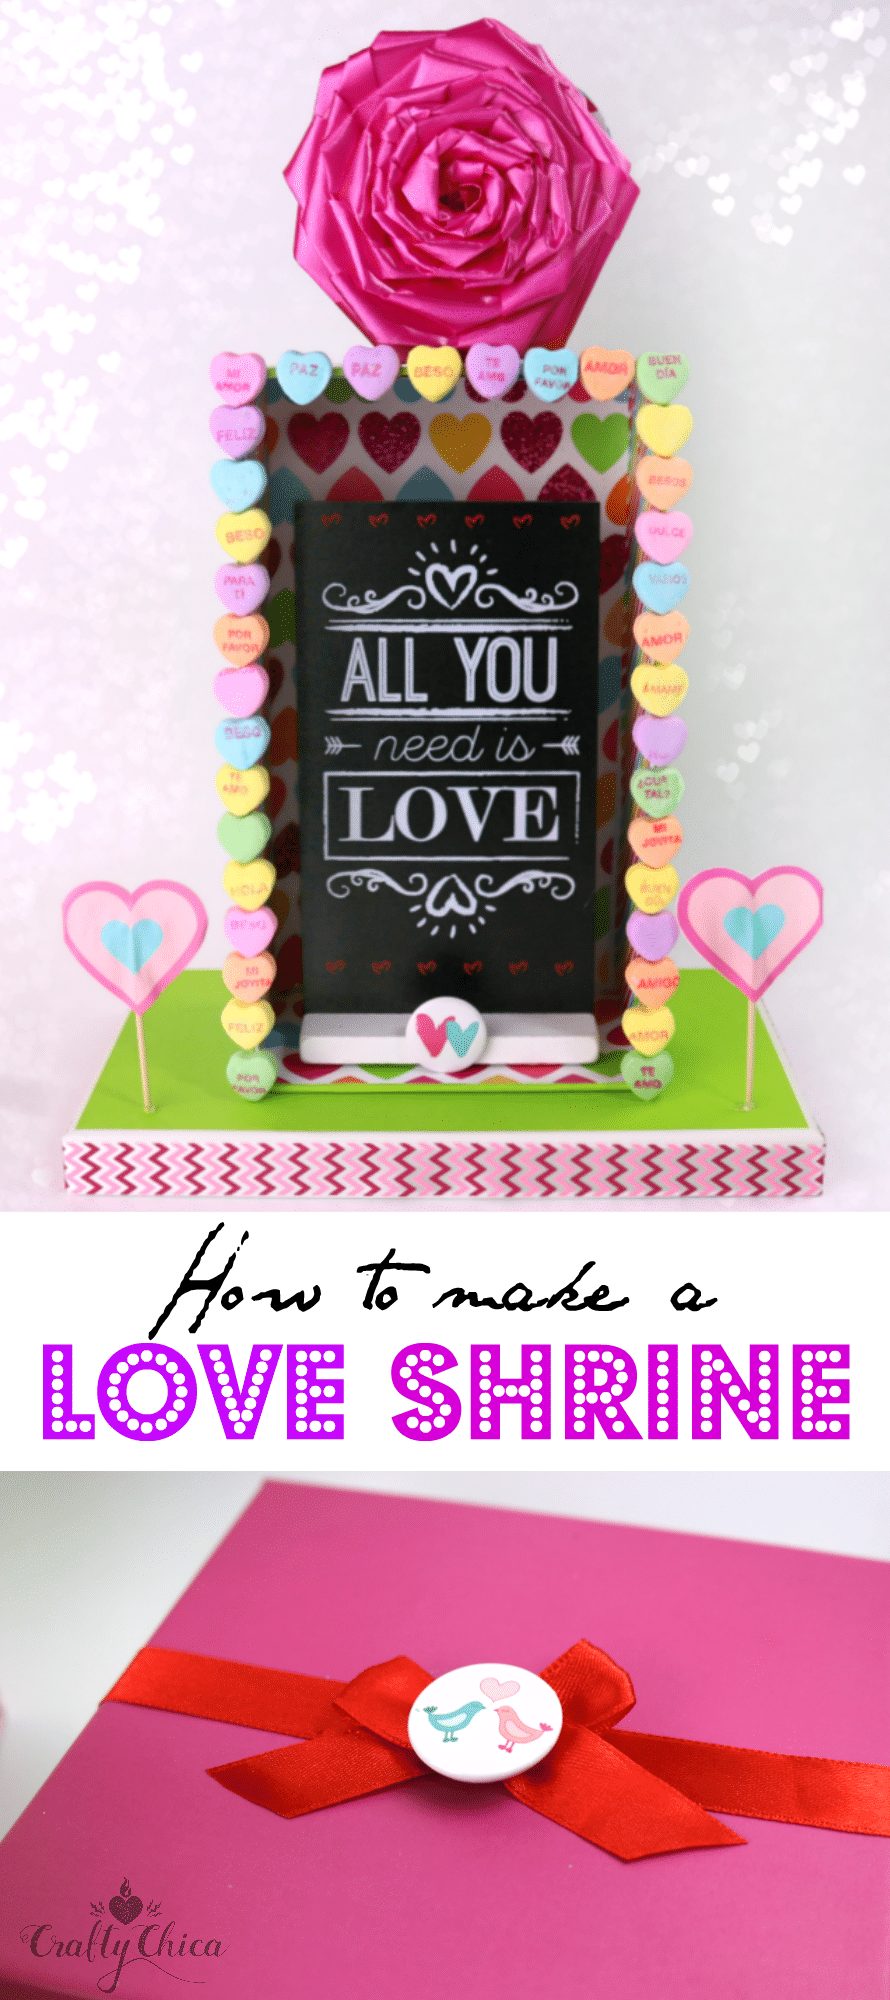 Make a Valentine shadow box for $5